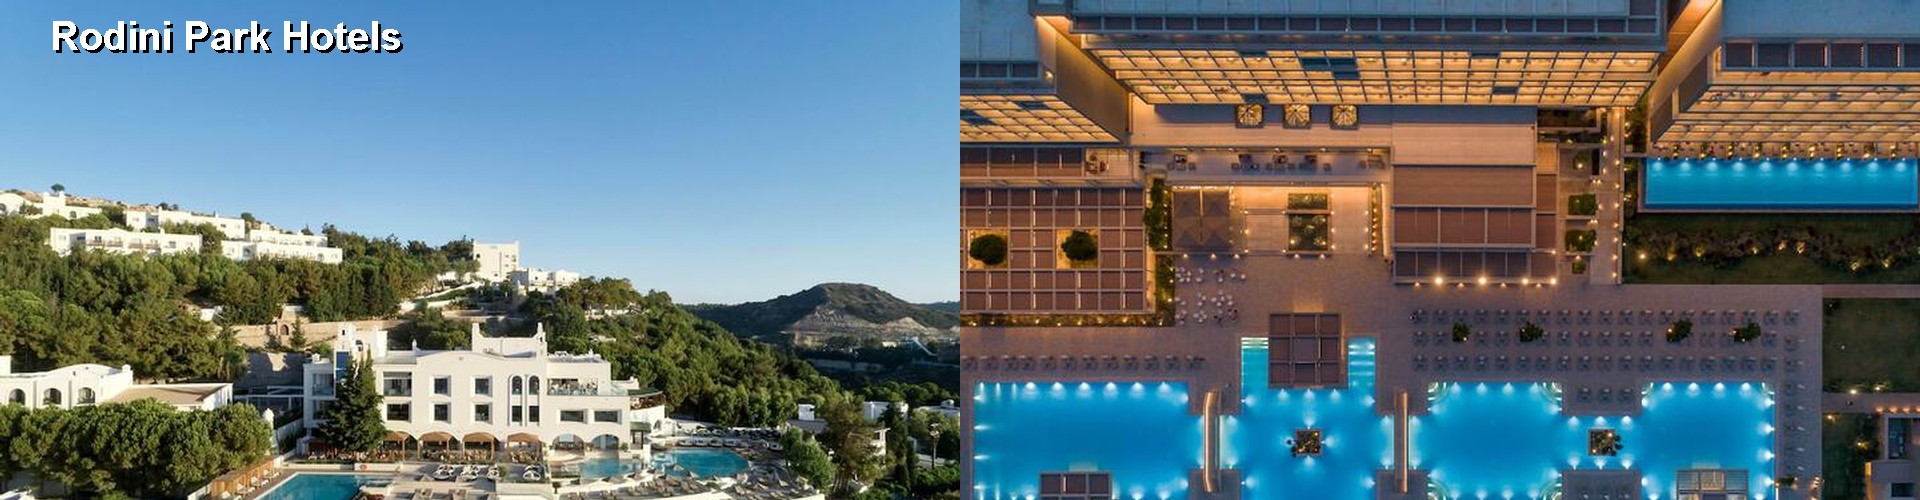 5 Best Hotels near Rodini Park